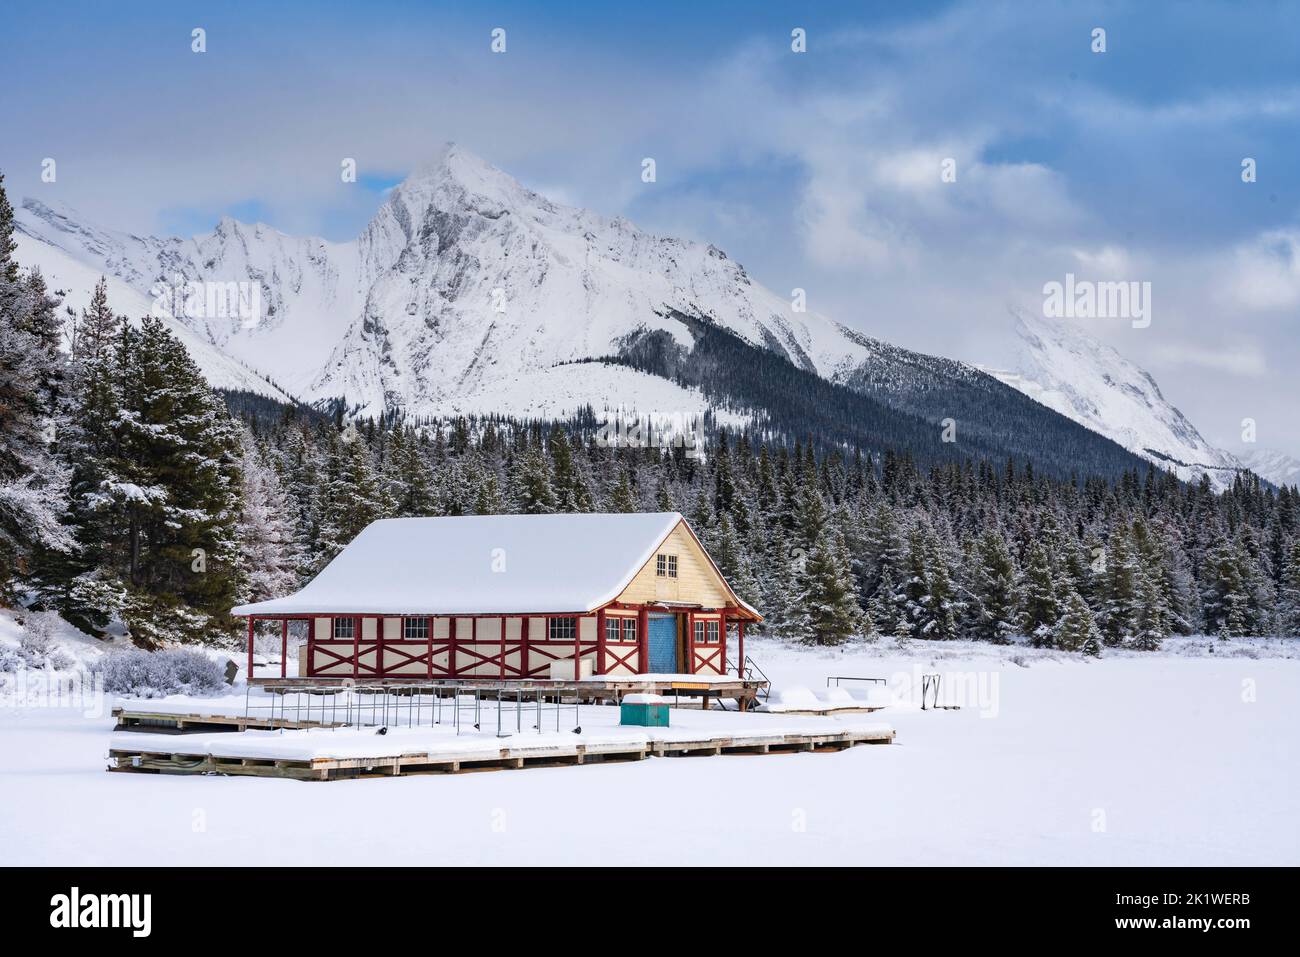 The Maligne Lake boathouse at Maligne Lake road in winter,  Jasper National Park, Alberta, Canada. Stock Photo